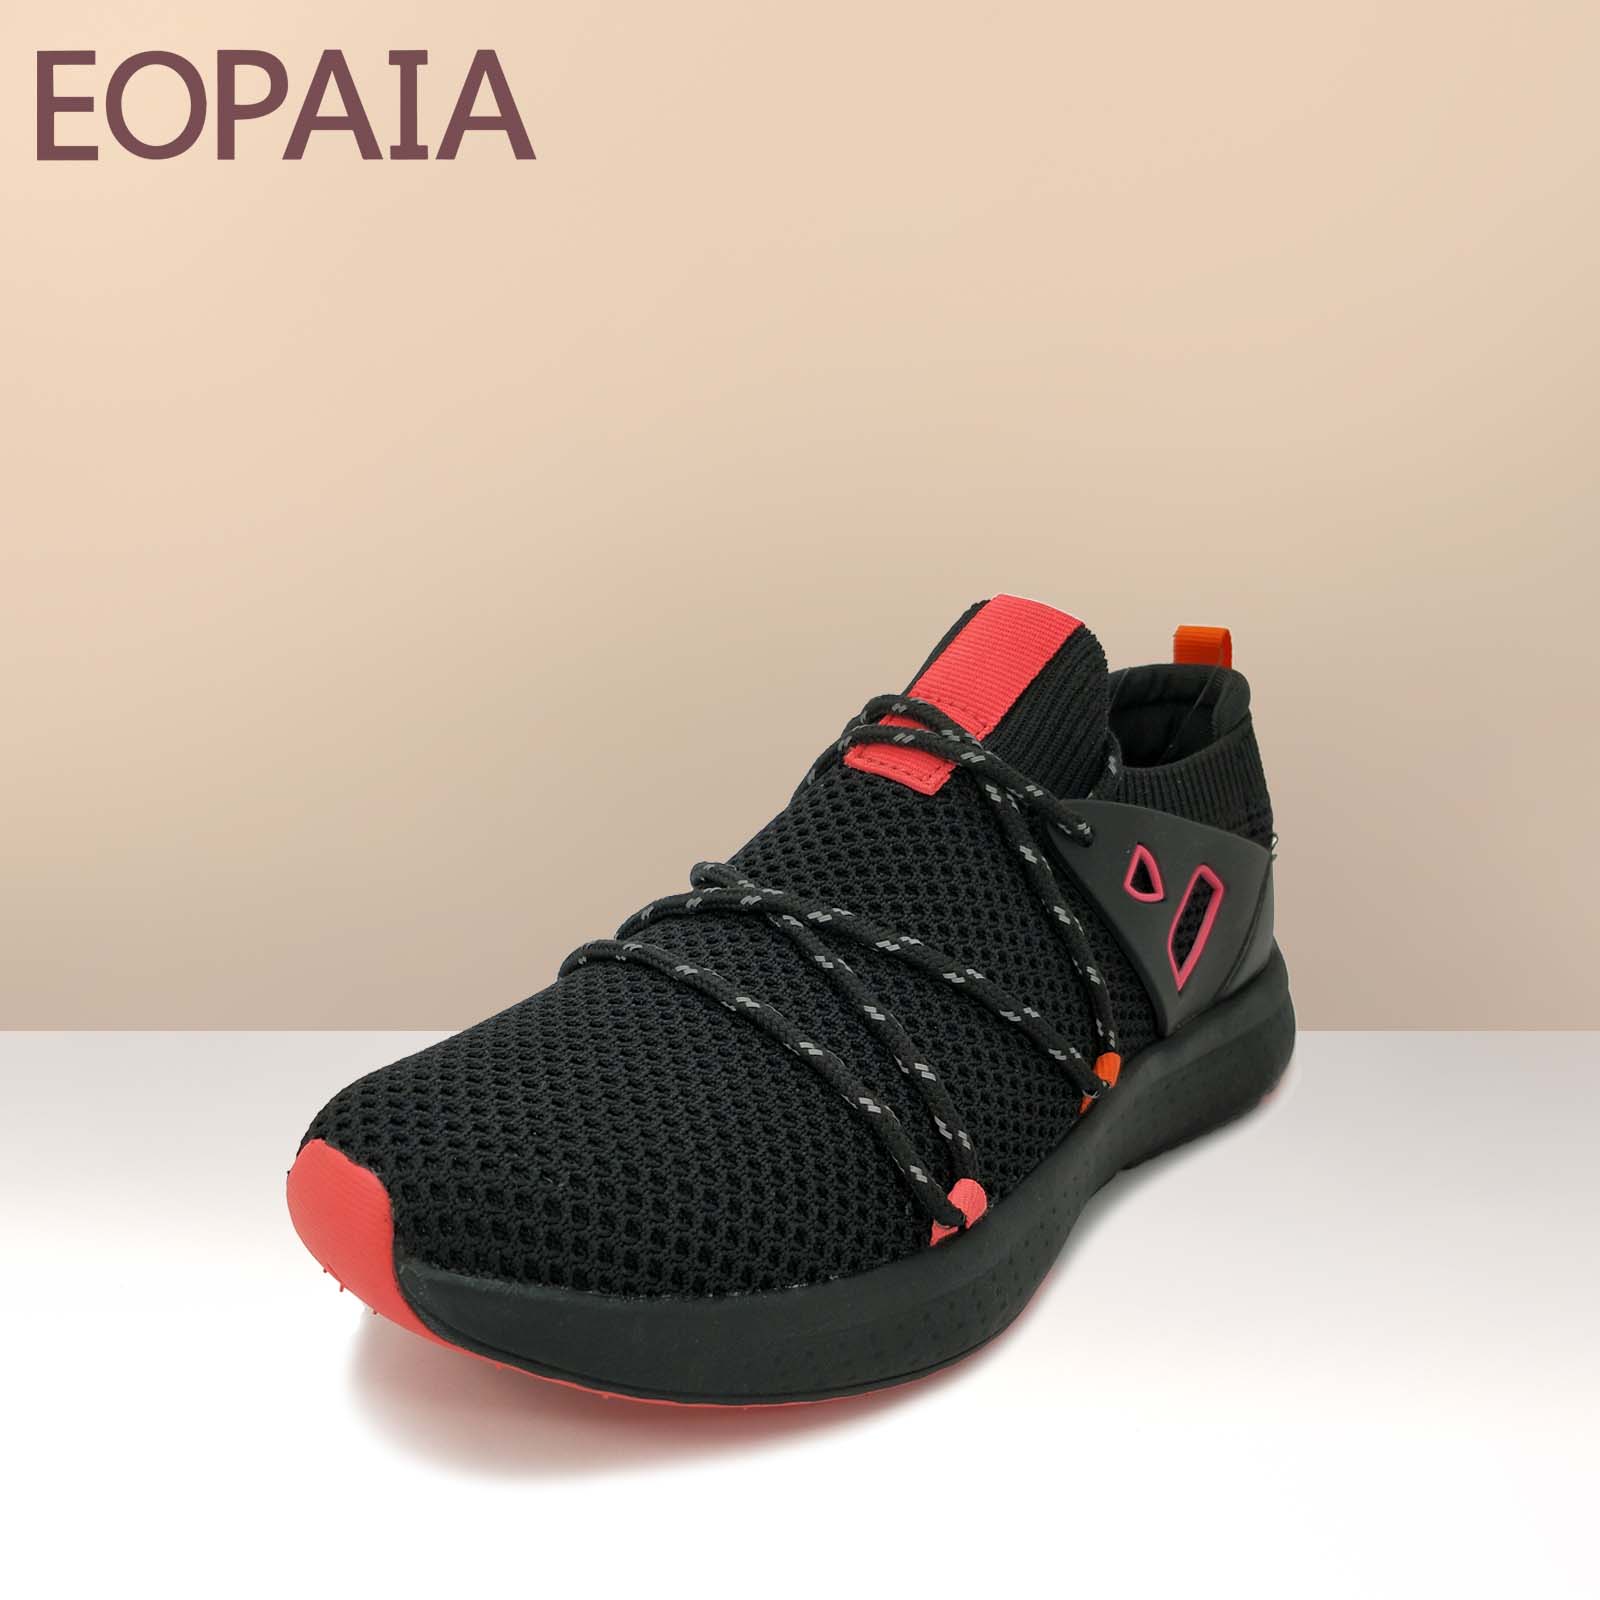 Fly-rajut Sepatu Knit Sepatu Untuk Wanita Sepatu Olahraga Sepatu Fashion Kasual Lace-up Slip Pada Sepatu Ringan